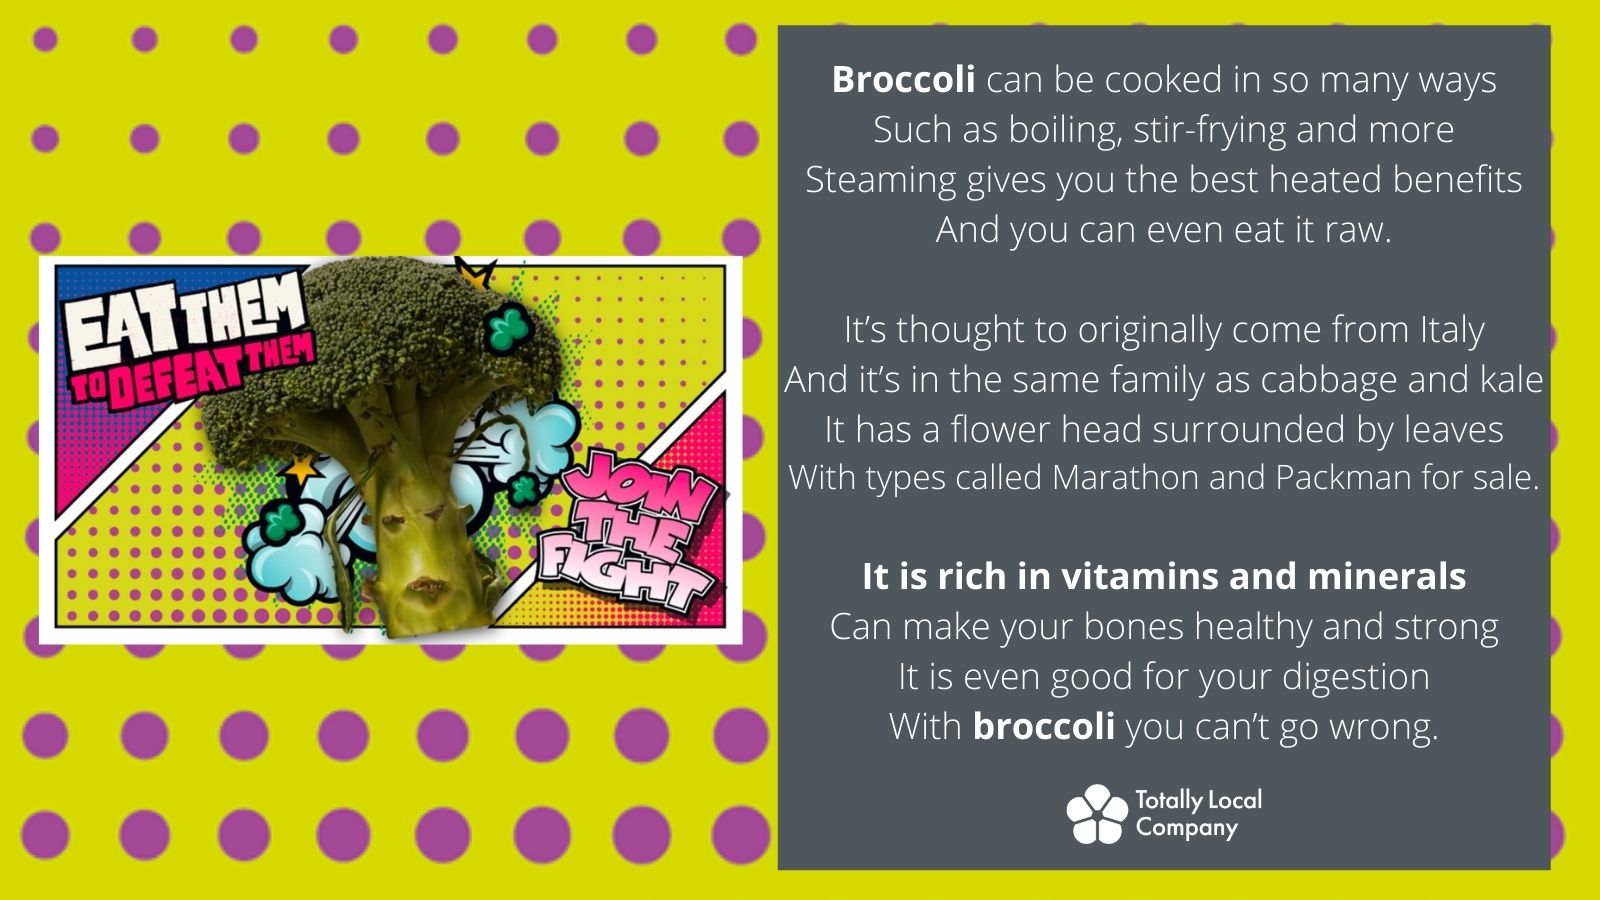 Eat Them to Defeat Them – Broccoli!